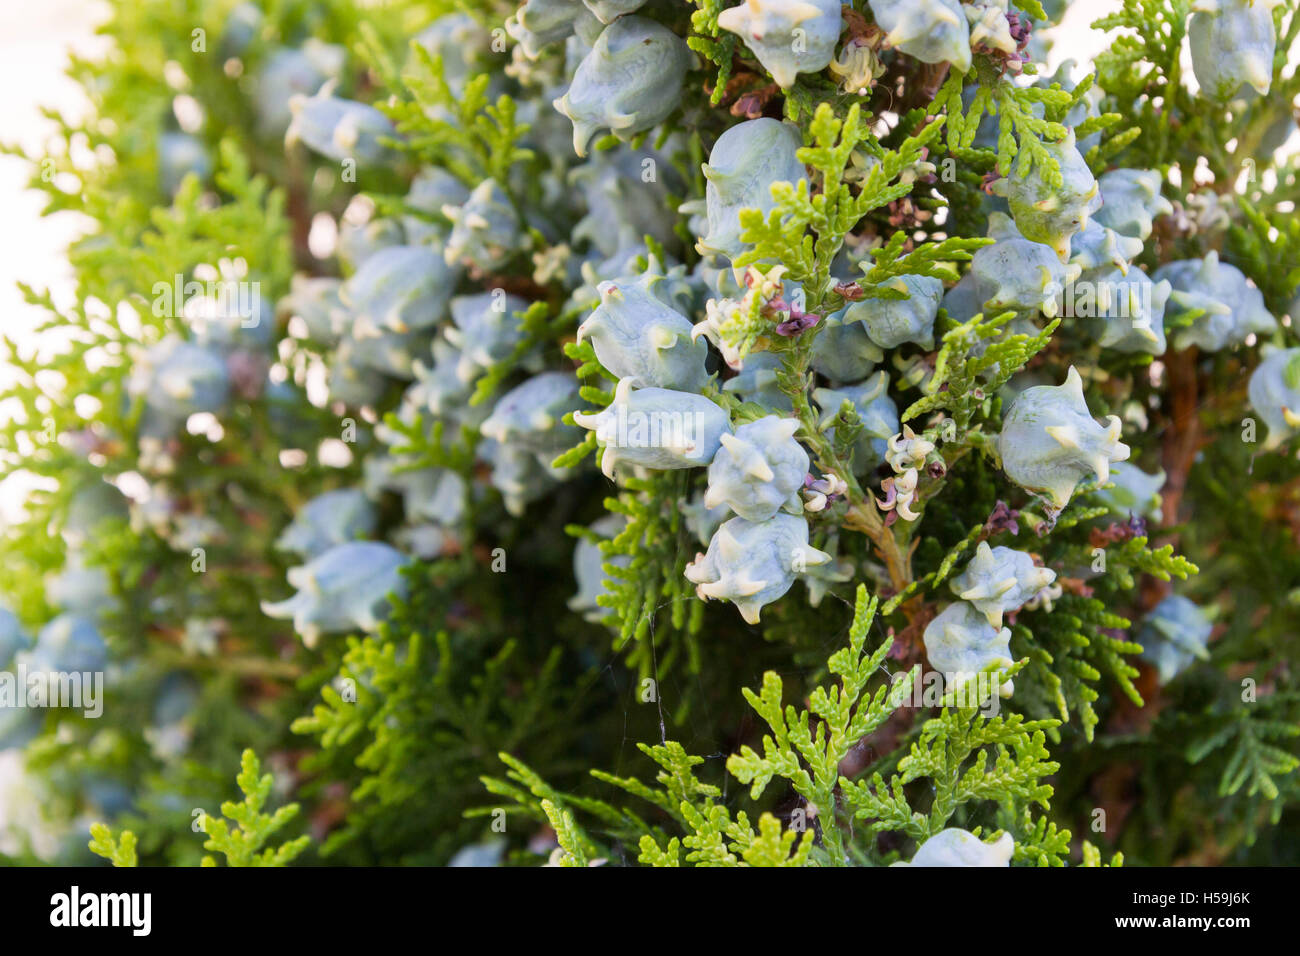 Green arborvitae tree shrub with cones Stock Photo